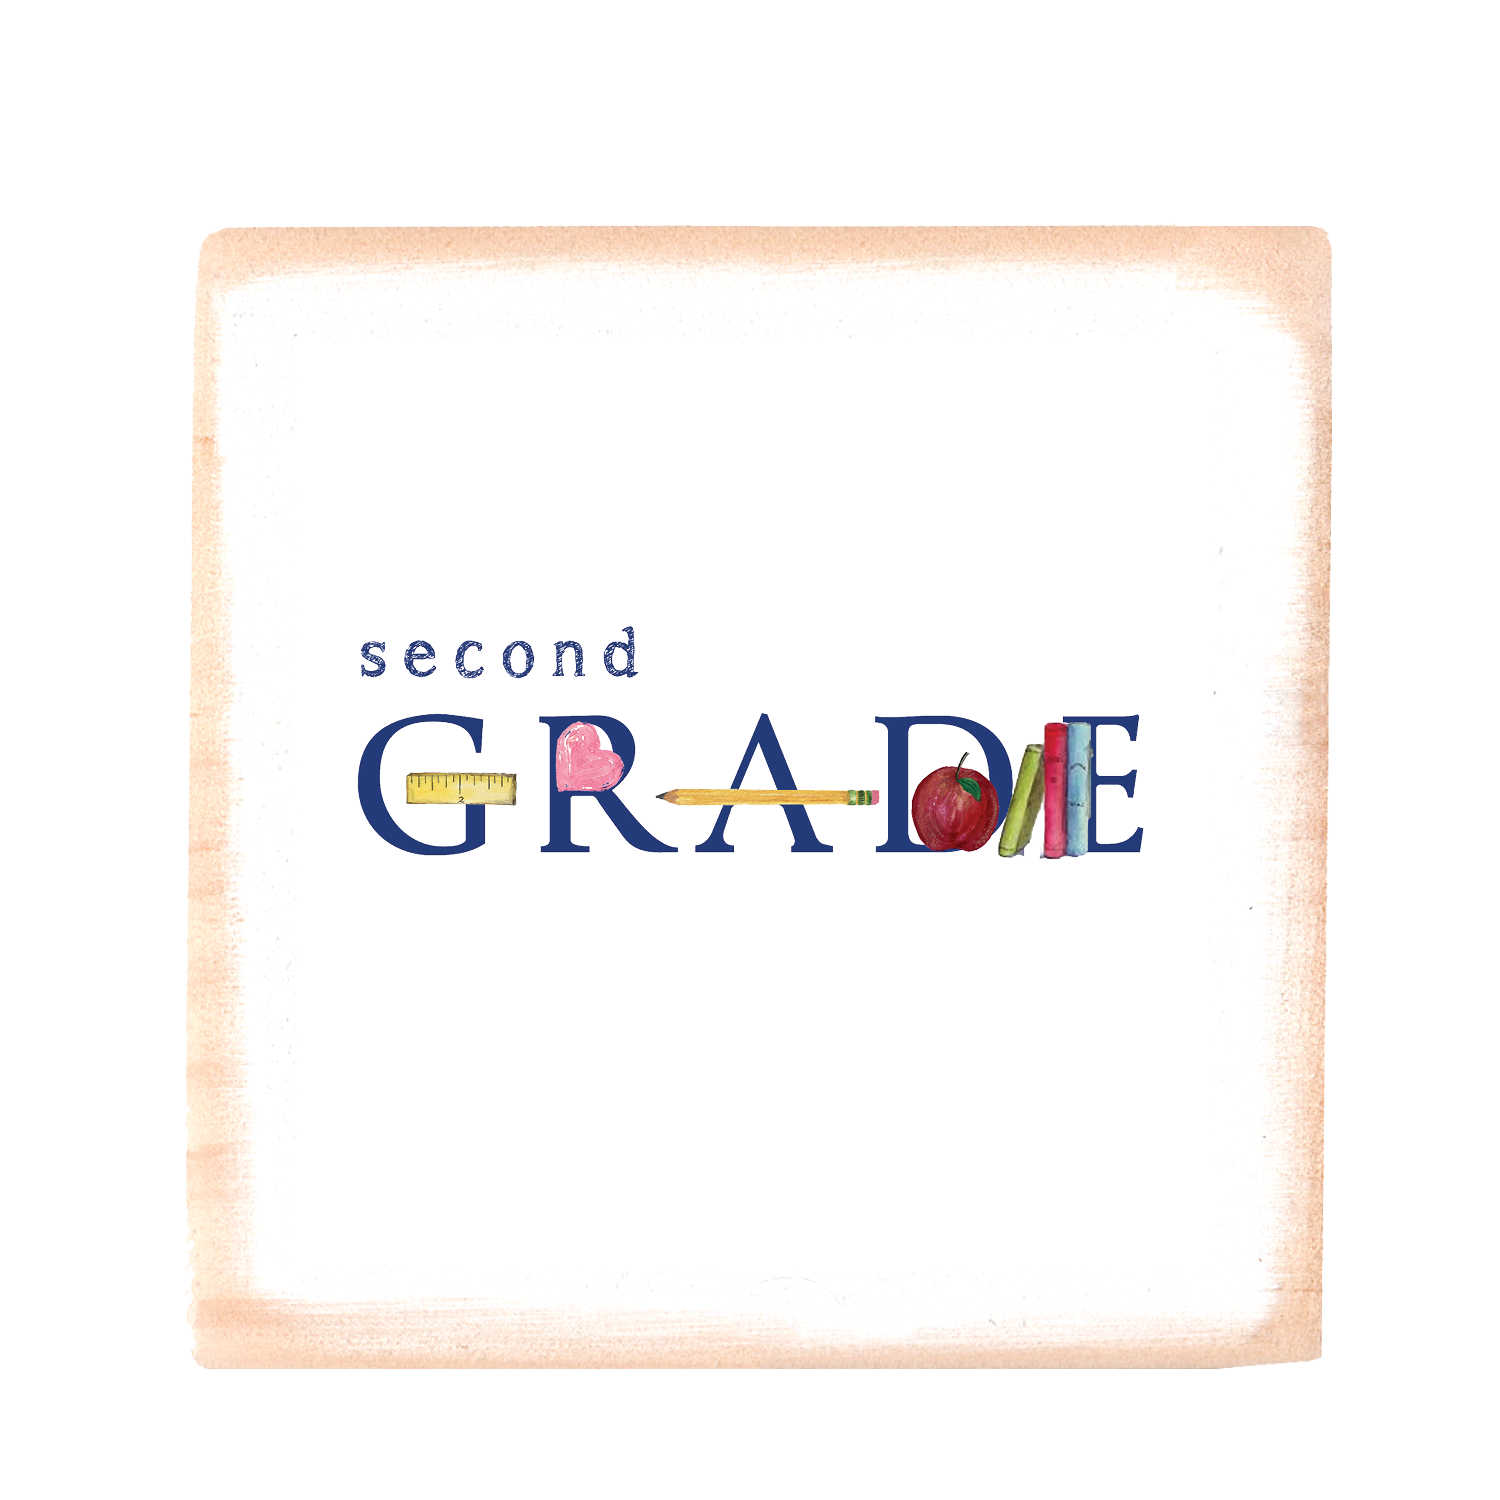 second grade square wood block